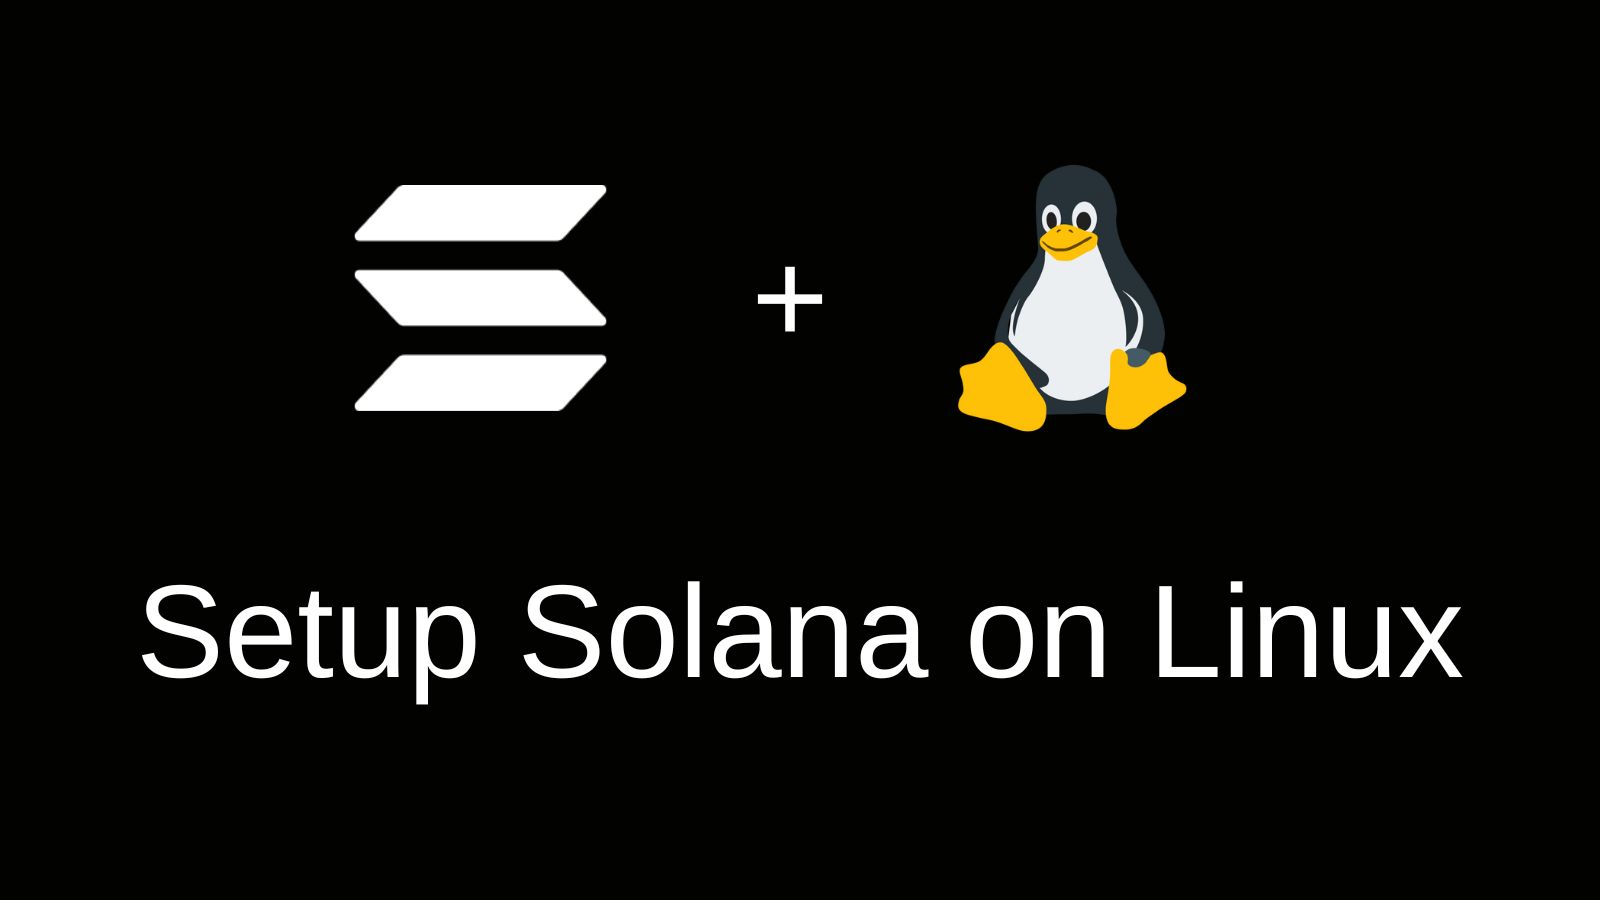 Setup Solana on Linux